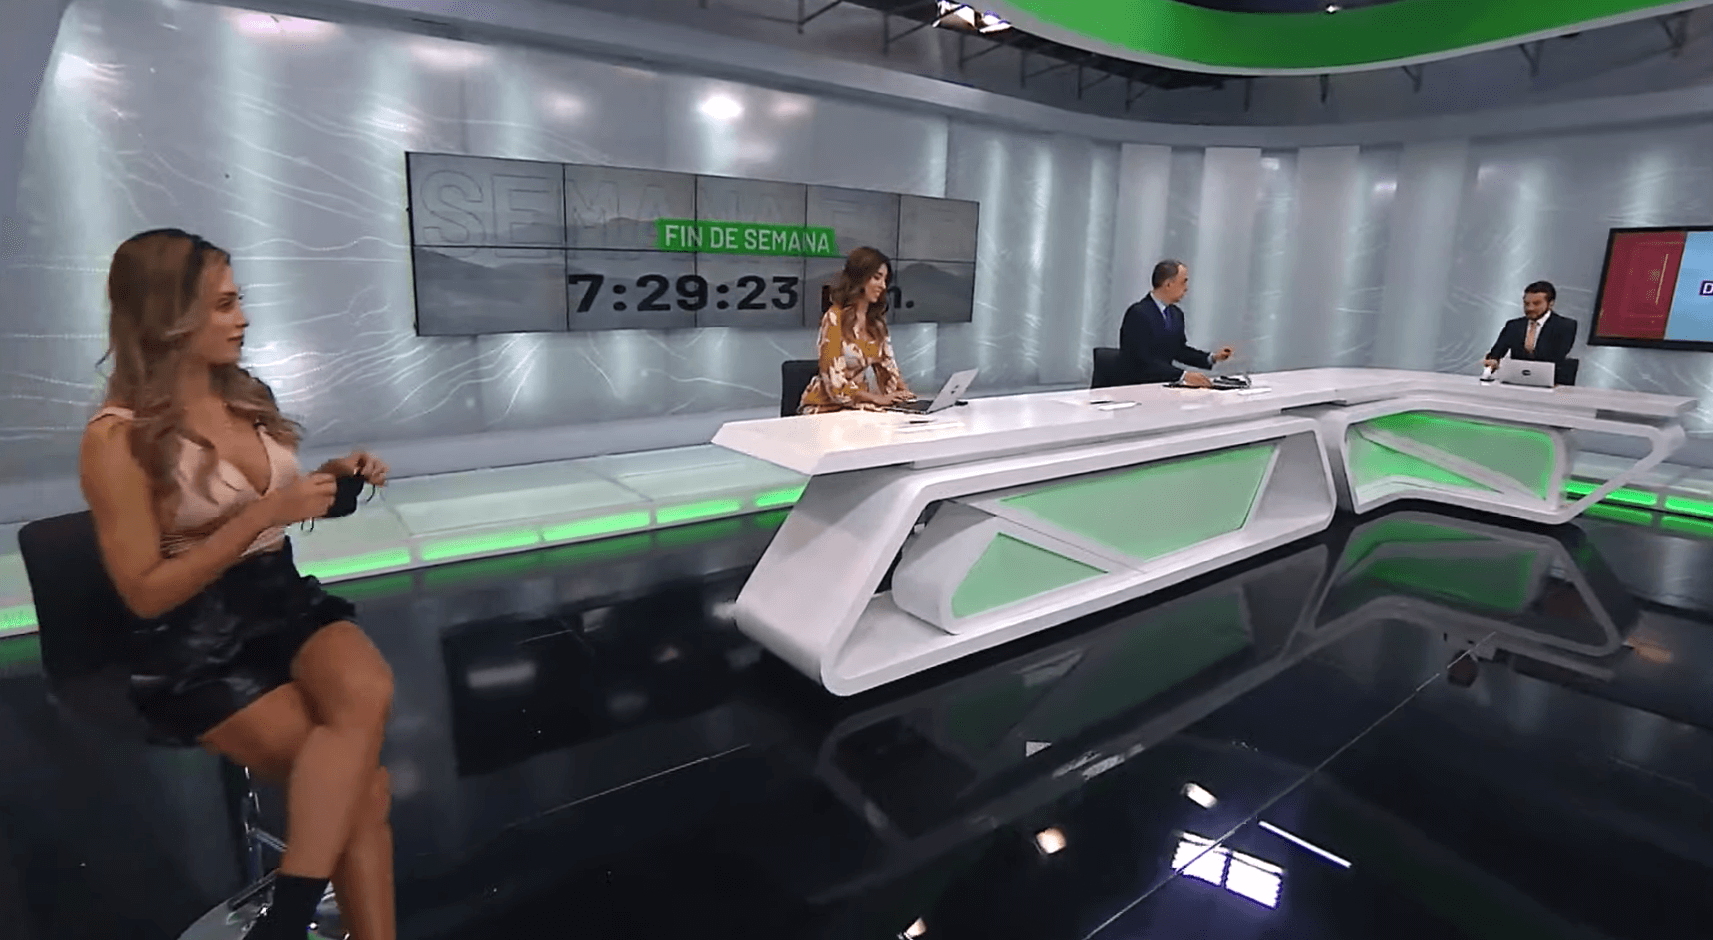 Teleantioquia Noticias – Sábado 26 de junio de 2021 noche